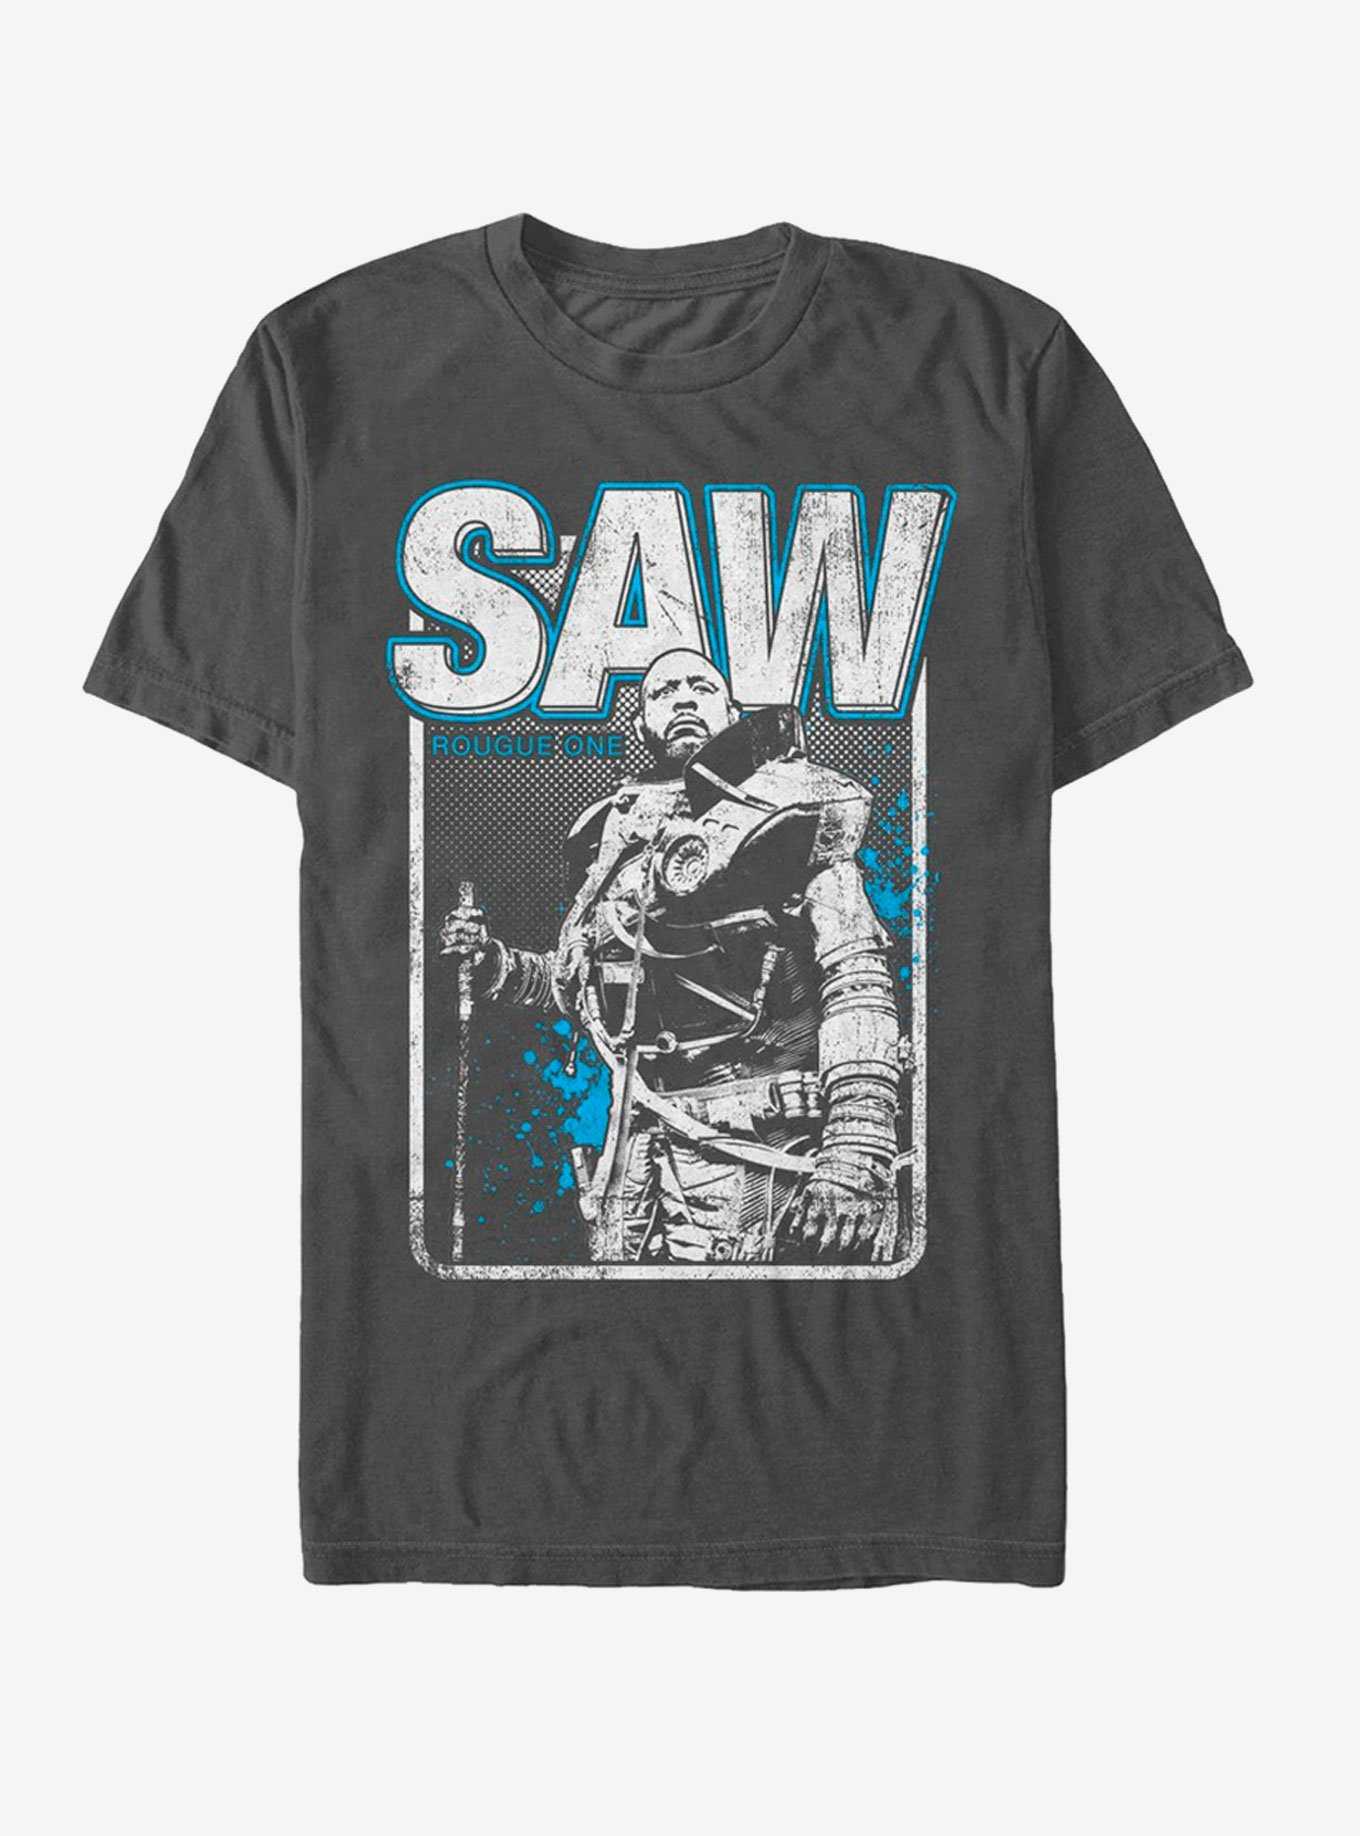 Star Wars Saw Warrior T-Shirt, , hi-res